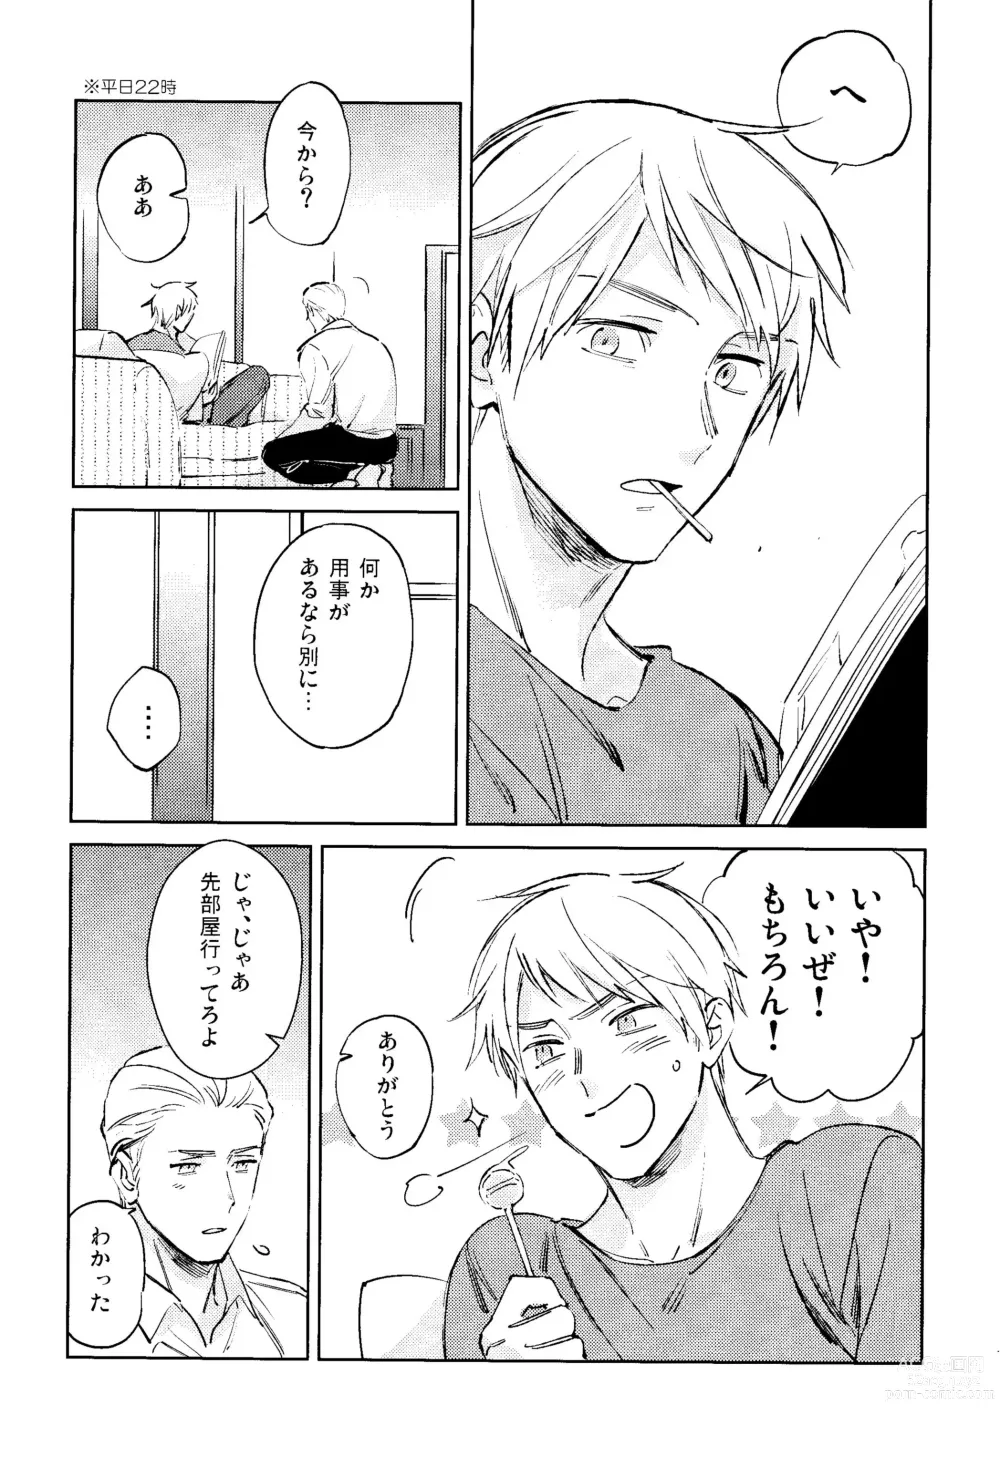 Page 9 of doujinshi Toge